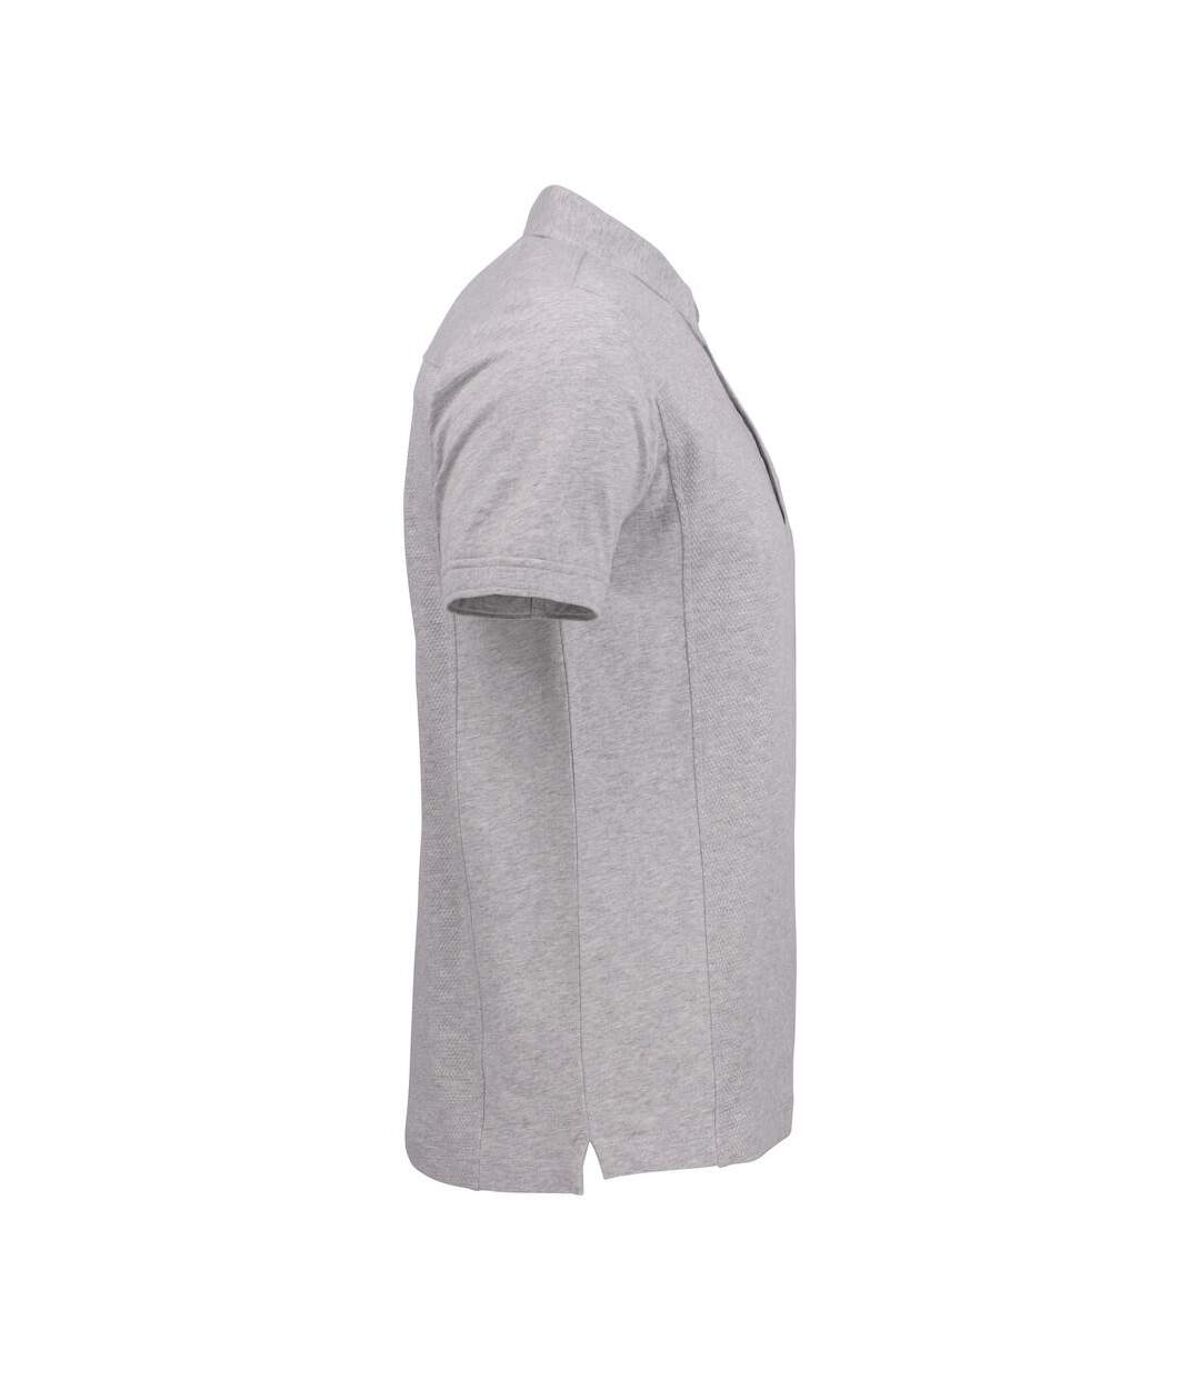 James Harvest Mens Shellden Jacquard Polo Shirt (Ash)